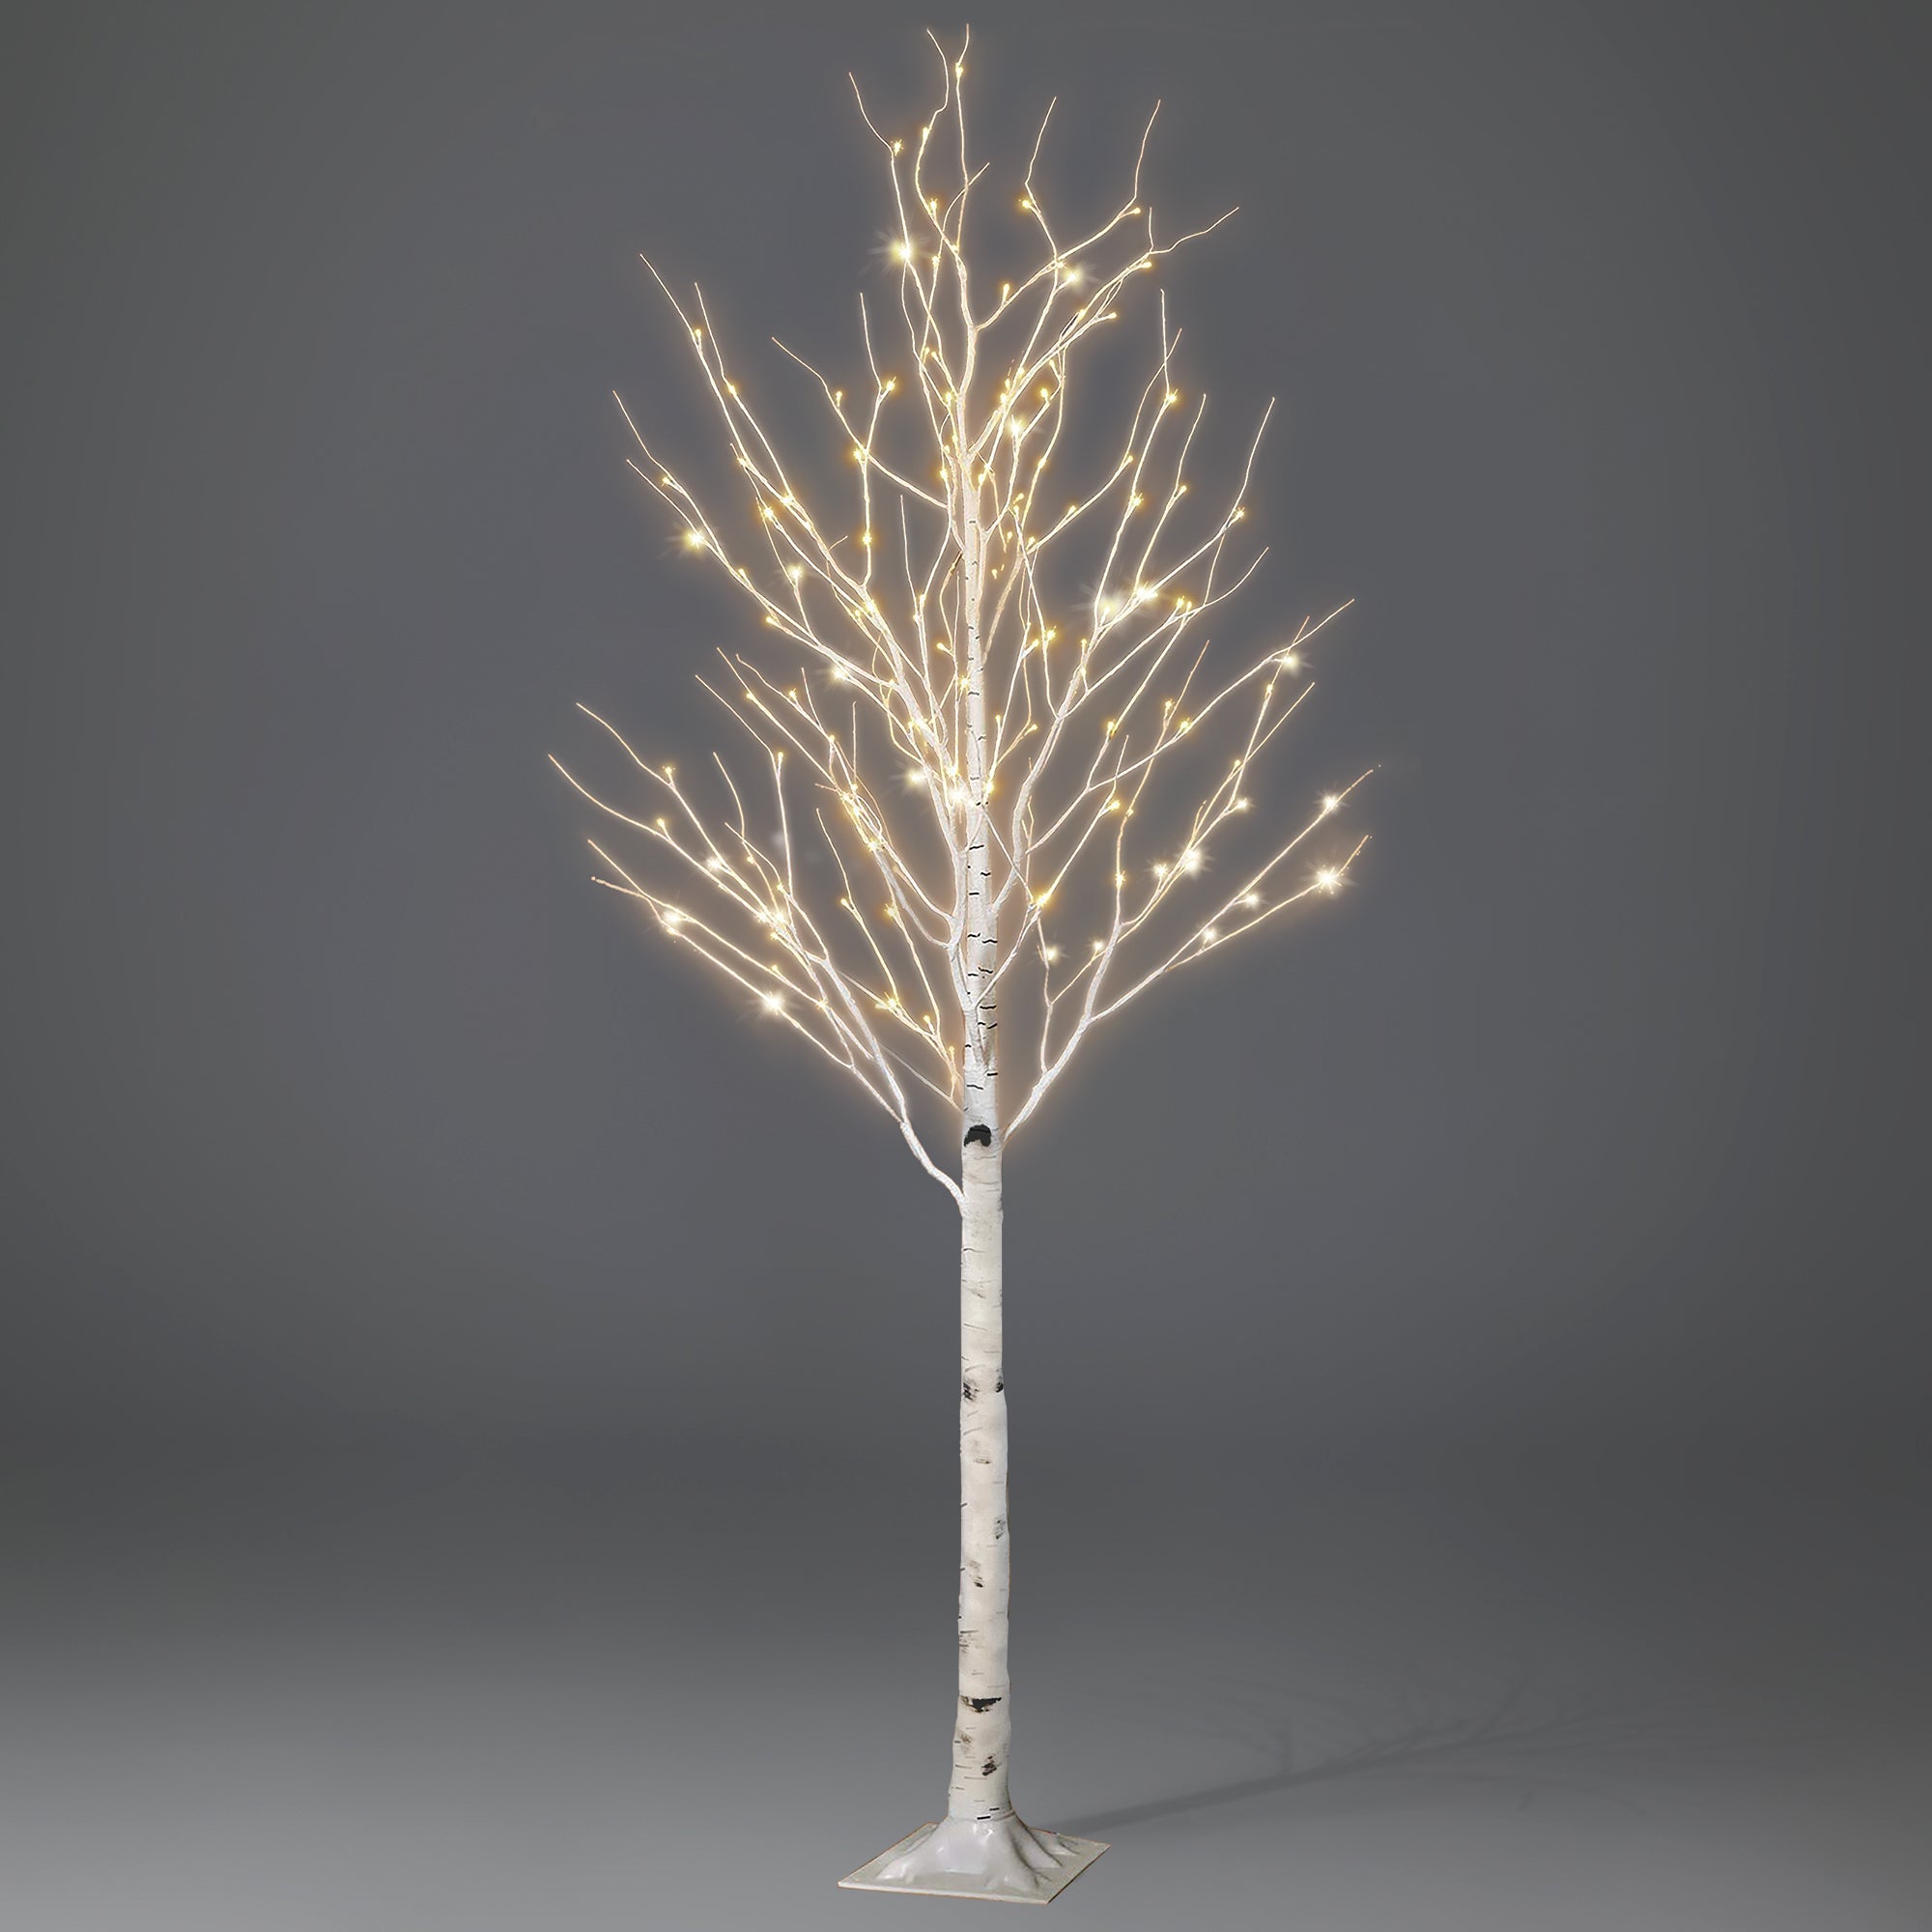 NETTA 6FT Pre-Lit Birch Tree with Warm White LEDs - White